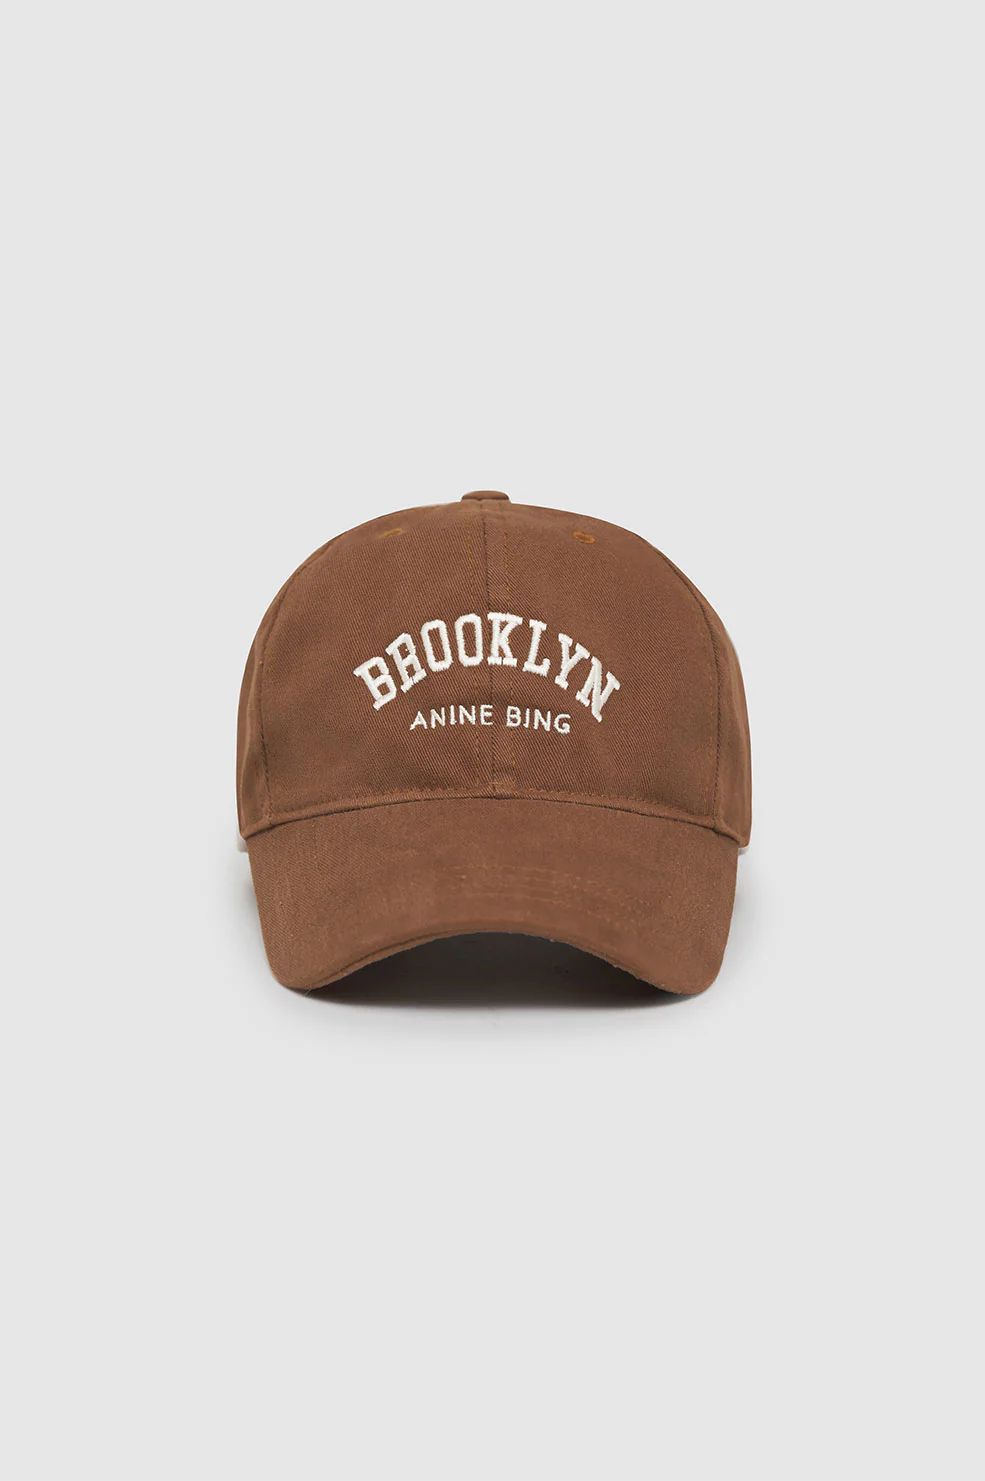 Jeremy Baseball Cap University Brooklyn - Camel | Anine Bing